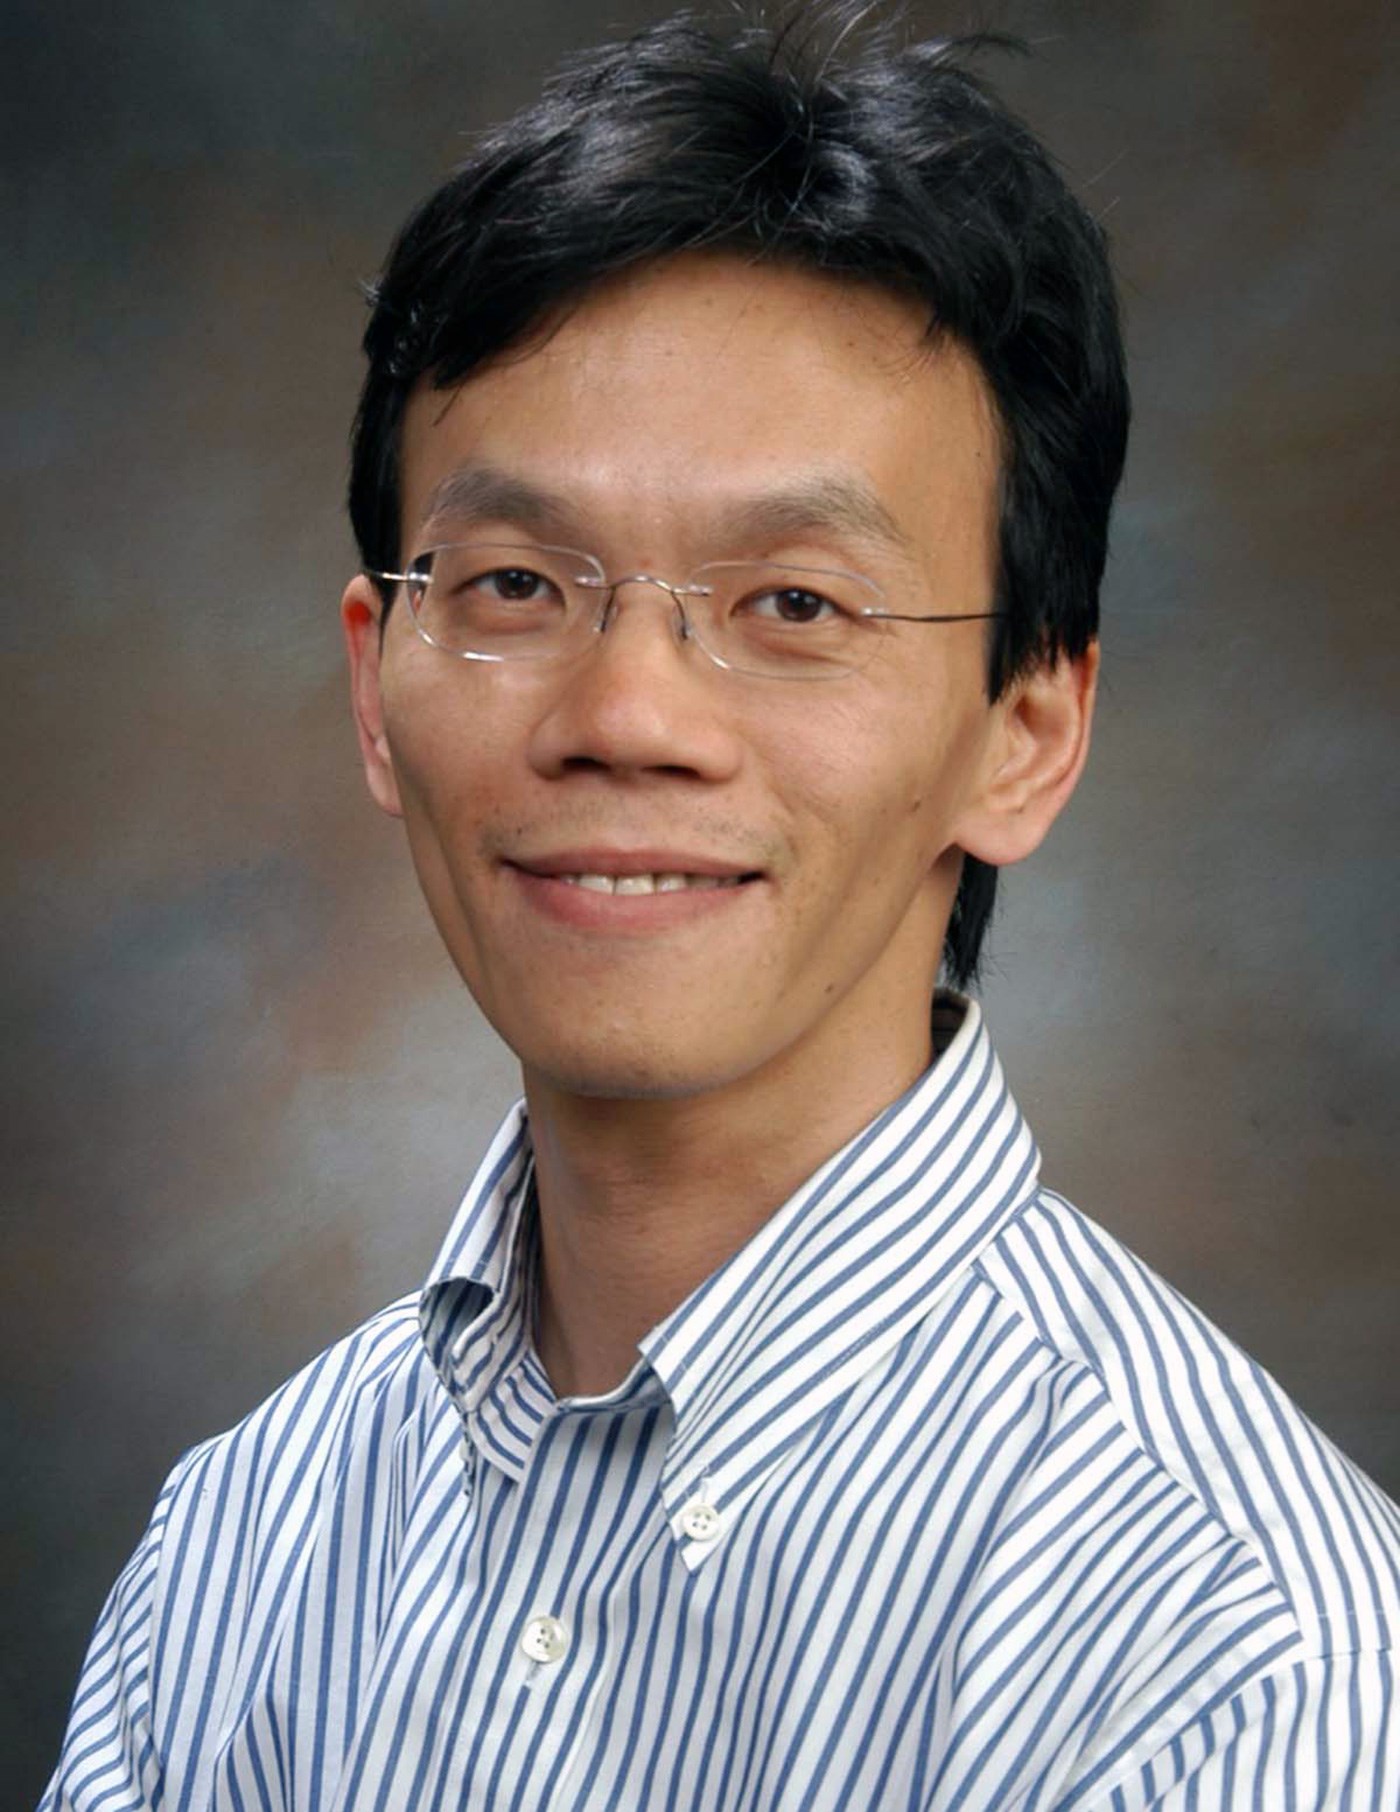 Neville Nien Huei Jiang  is an Assistant Teaching Professor in the Economics Department at UMass Lowell